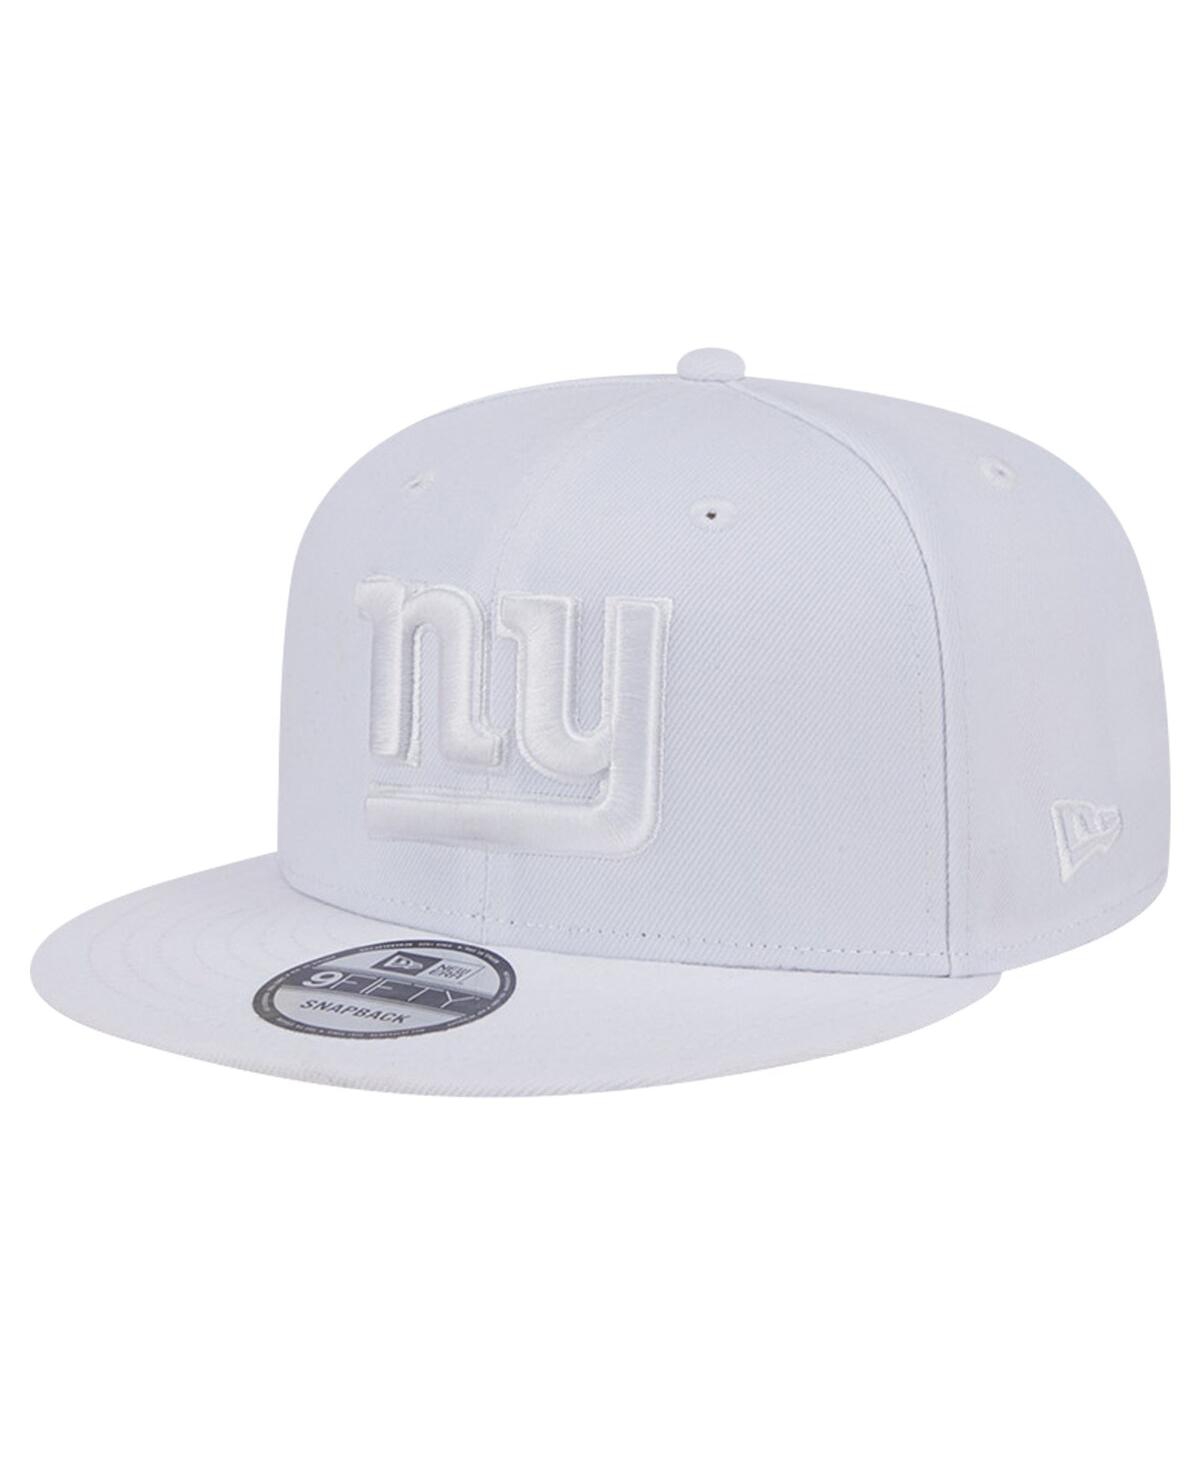 Men's New York Giants Main White on White 9Fifty Snapback Hat - White